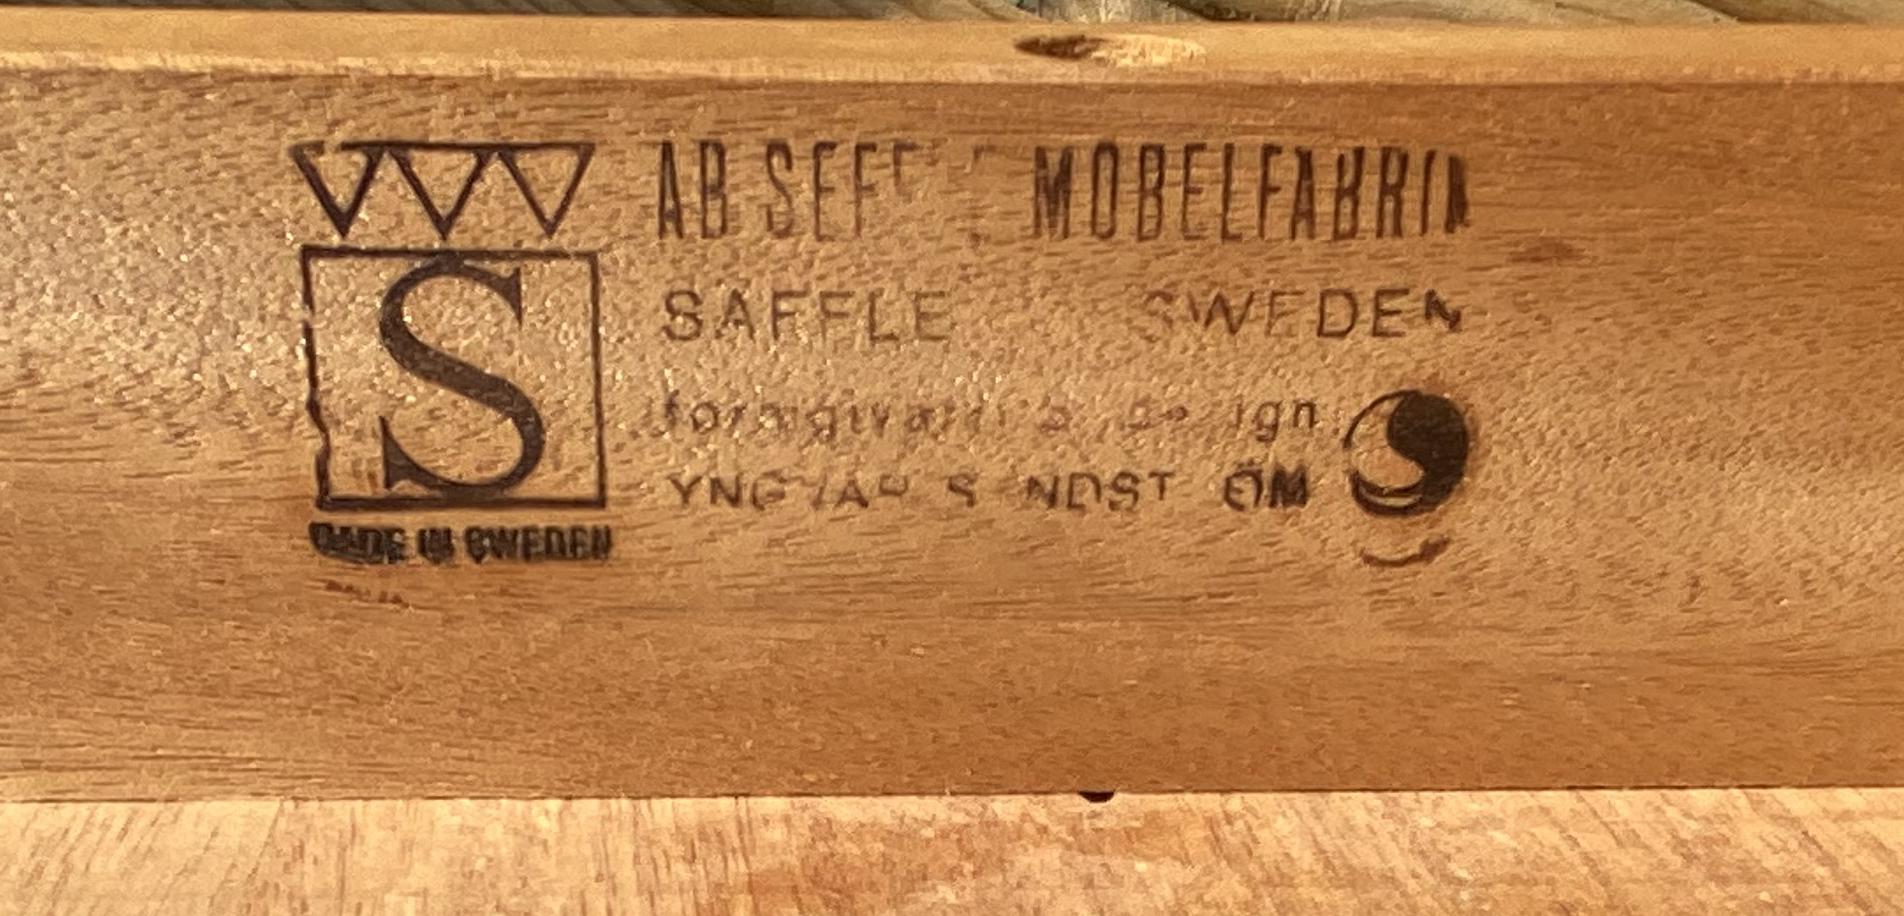 Swedish Pair of Santos Rosewood Tables by Yngve Sandstrom for Seffle Mobelfabrik